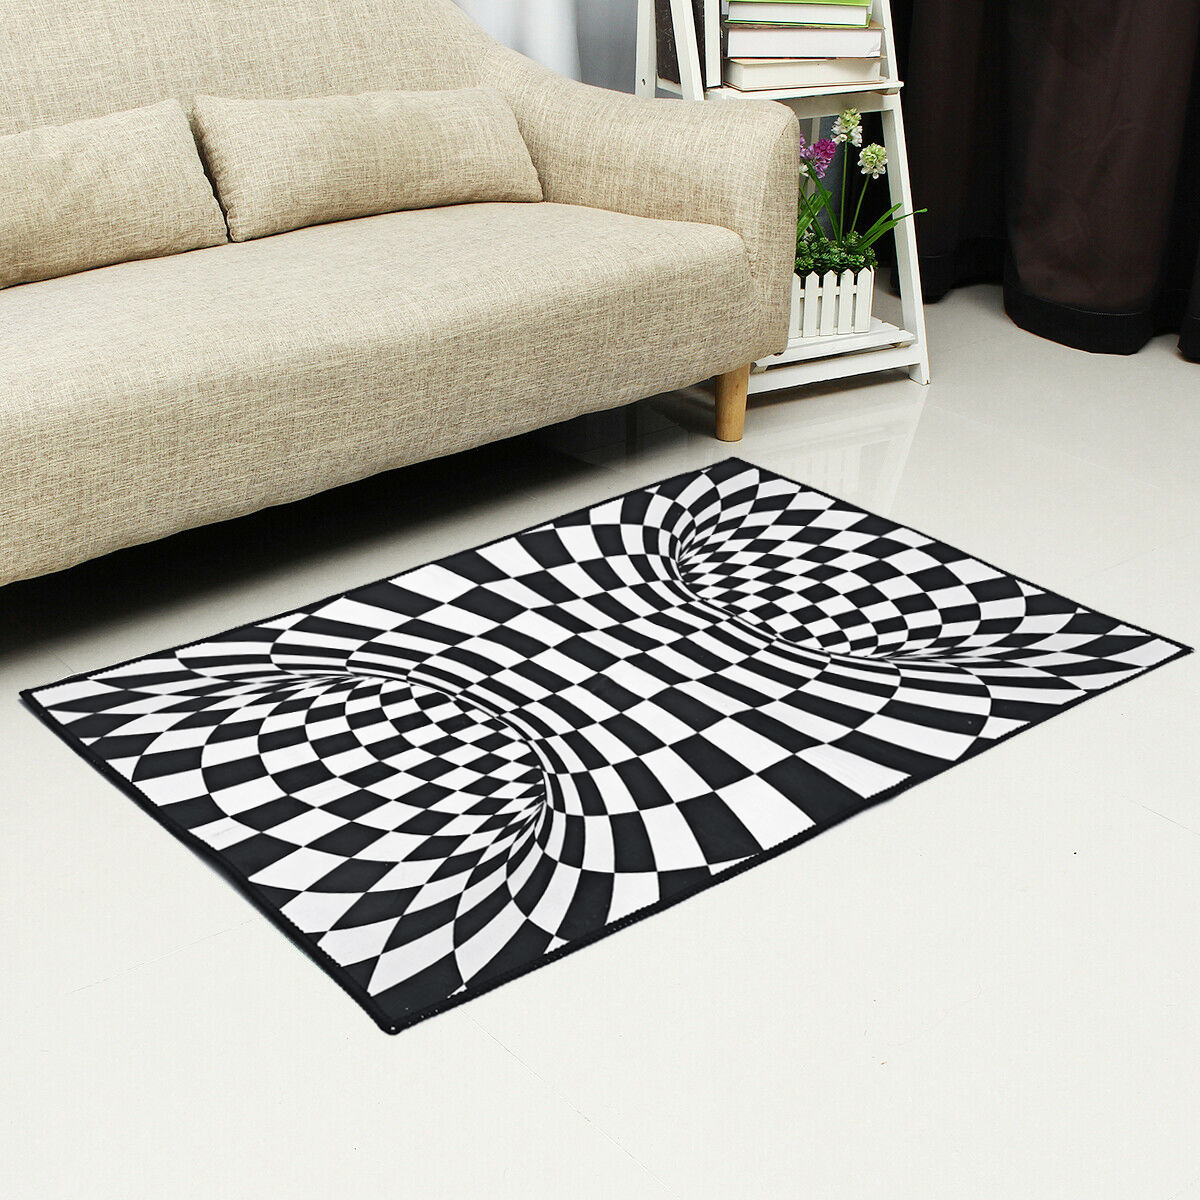 3D-Geometric-Printed-Fluffy-Carpet-Floor-Mat-Anti-Skid-Rug-Area-Bedroom-Nordic-1833435-5